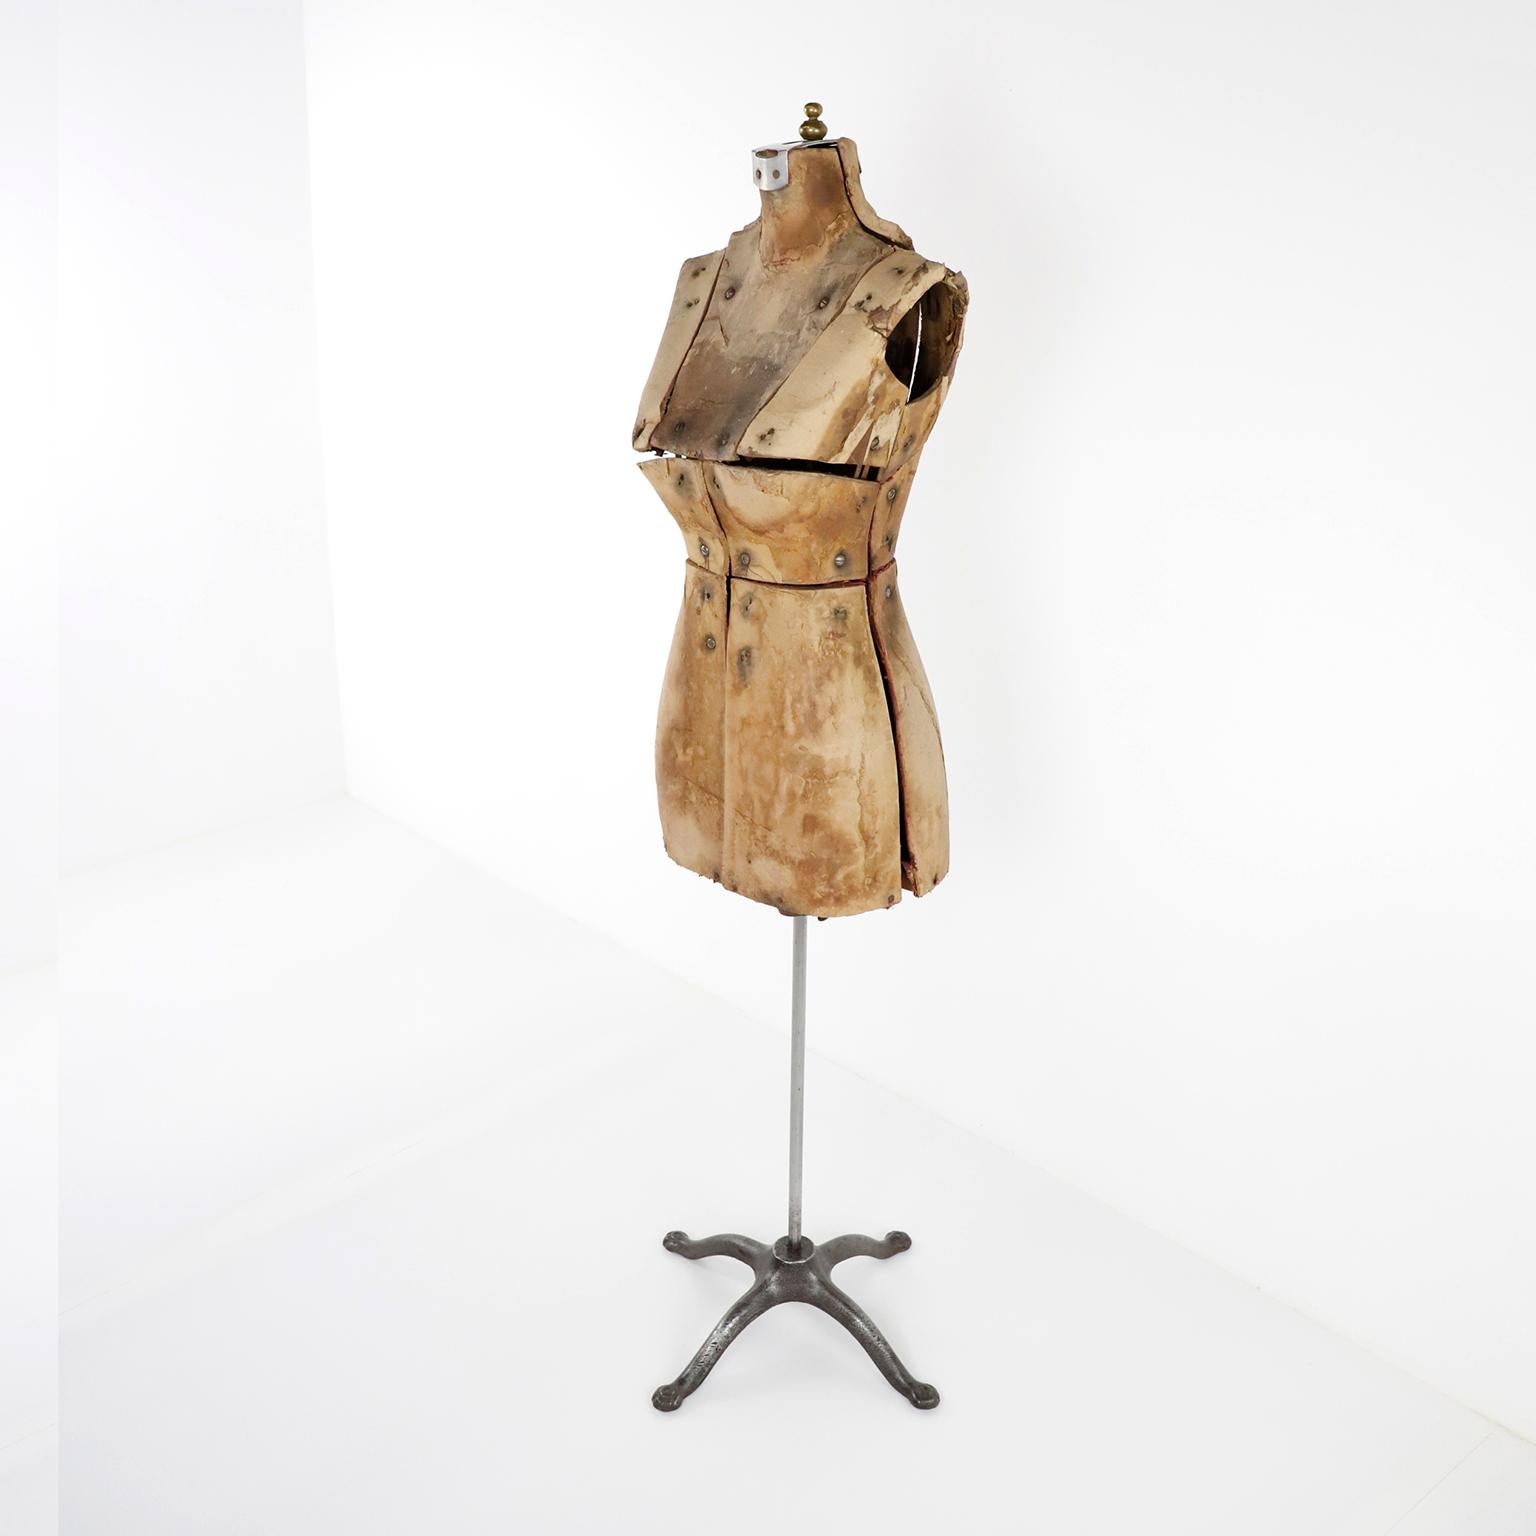 Circa 1920 we offer this vintage adjustable dress form mannequin, height adjustable.